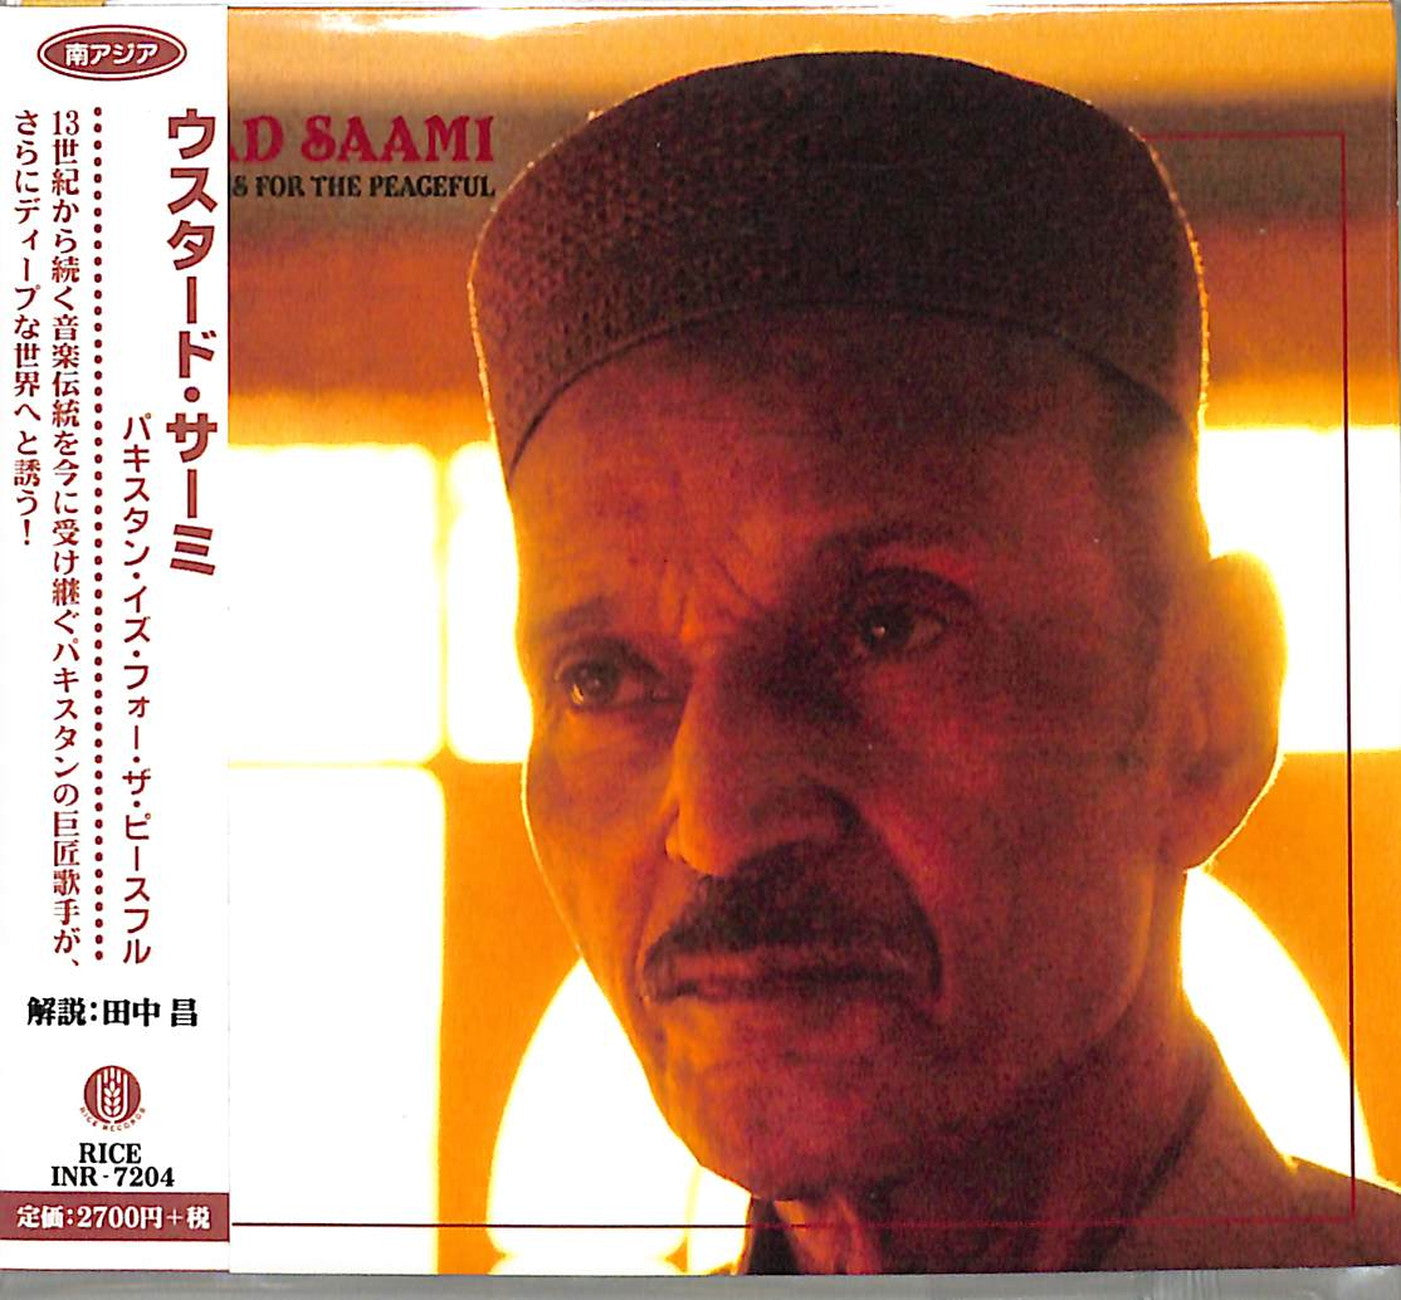 Ustad Saami - Pakistan Is For The Peaceful - Japan CD